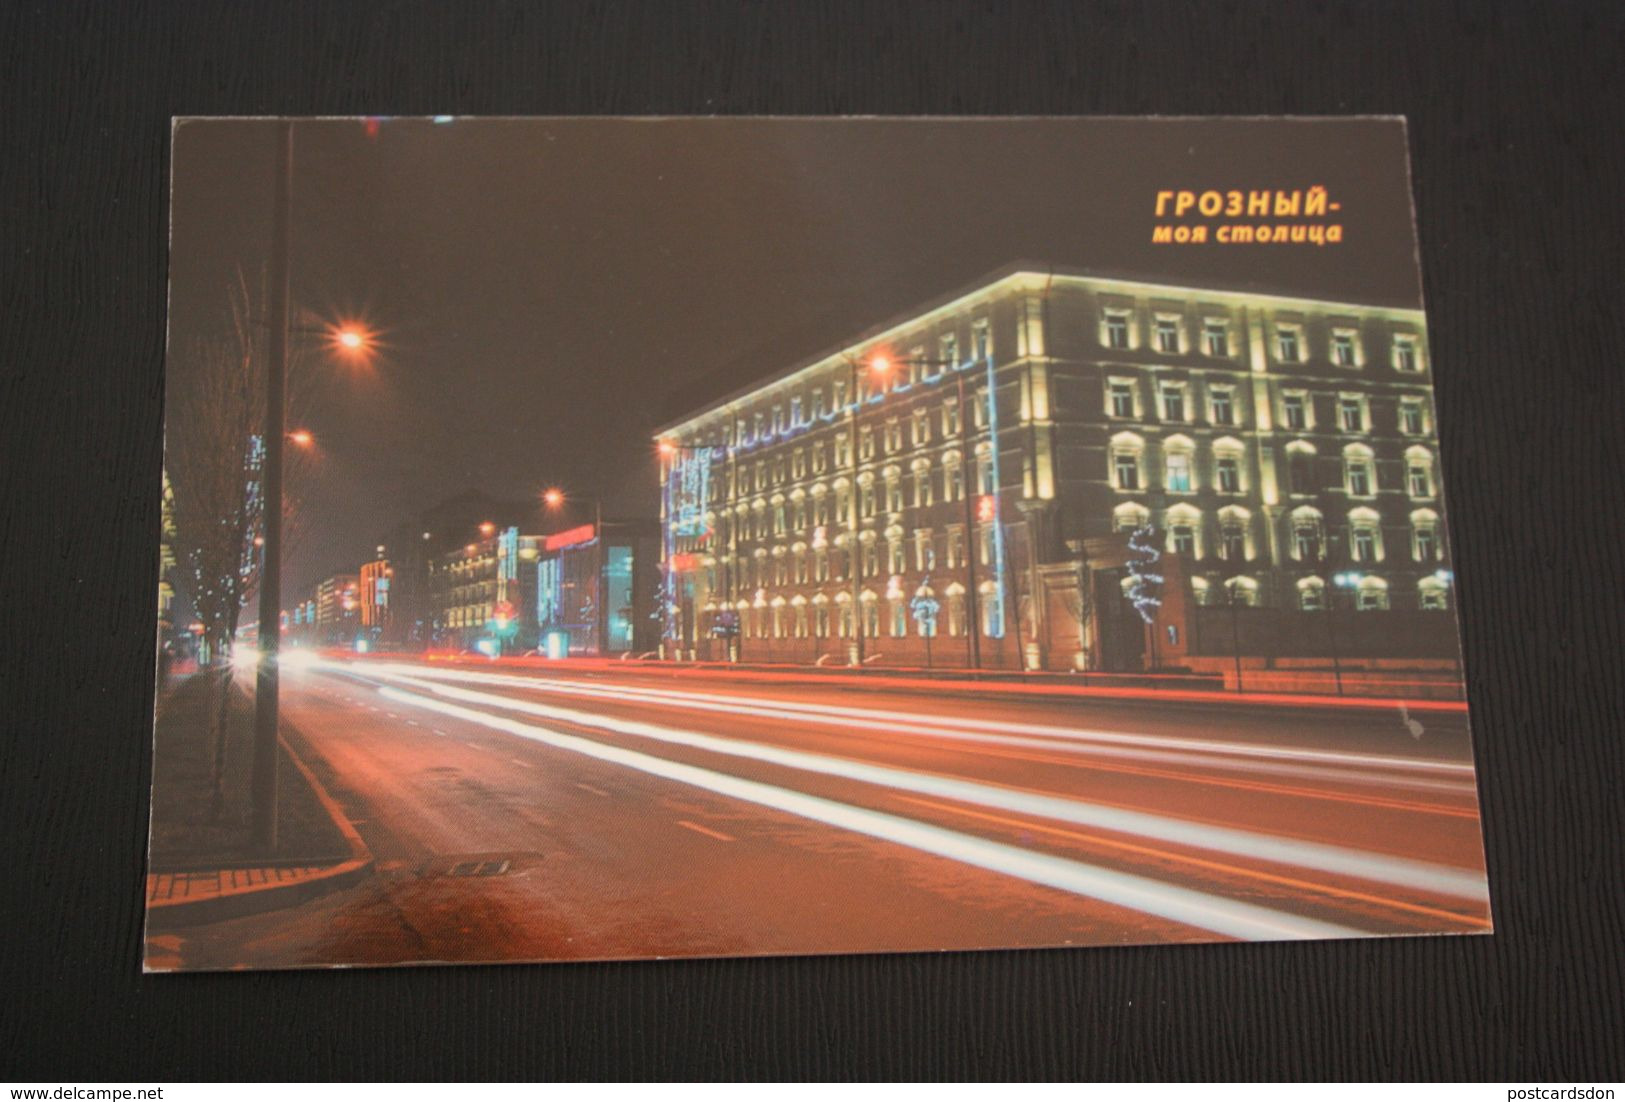 Russia. Chechen Republic - Chechnya. Groznyi Capital, Technological University - Modern Postcard 2000s - Chechnya